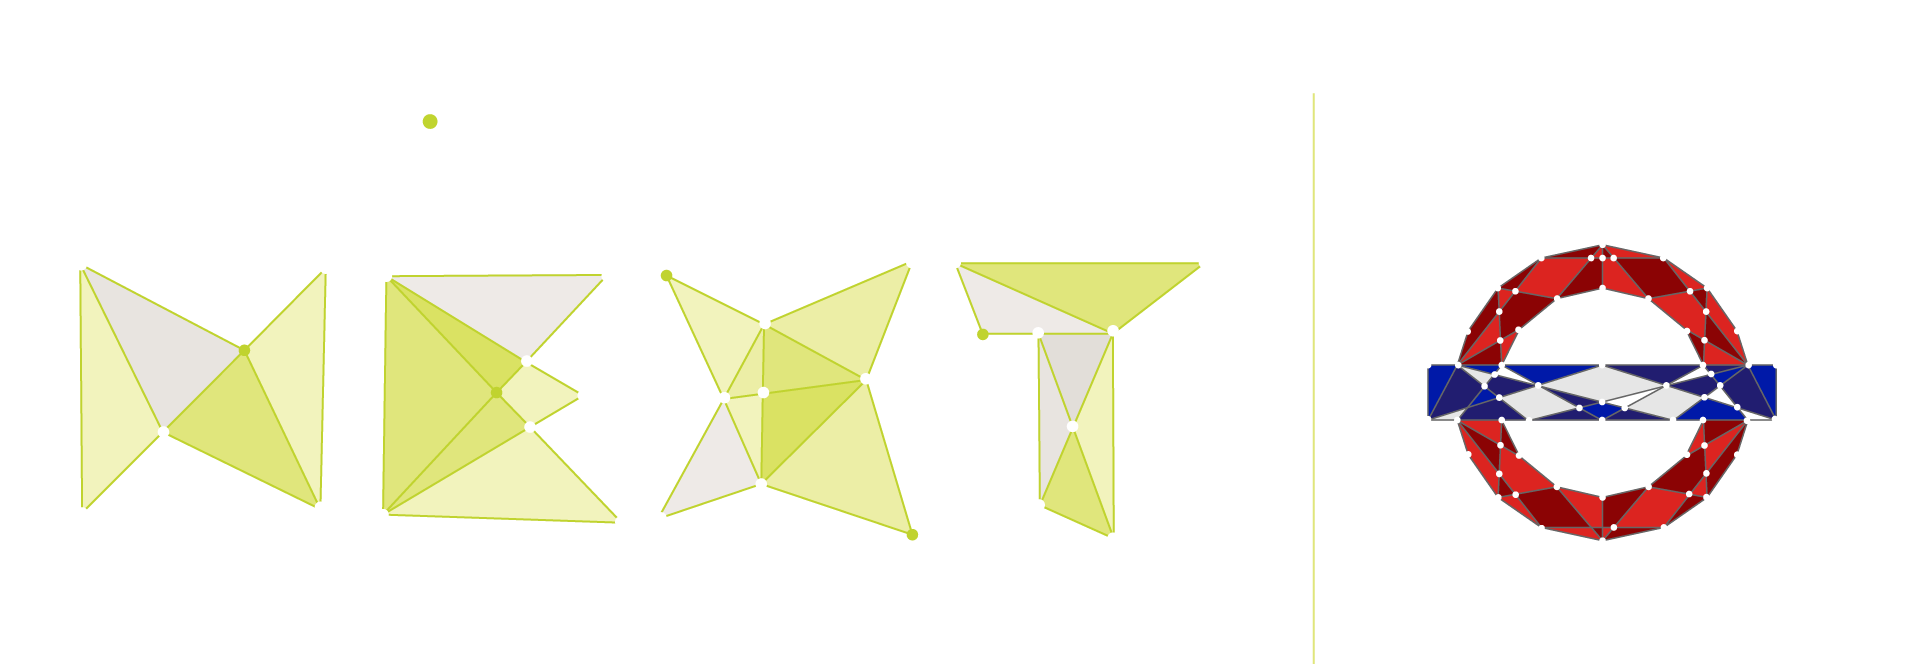 NEXT London Copy Medidata Solutions Medidata Solutions